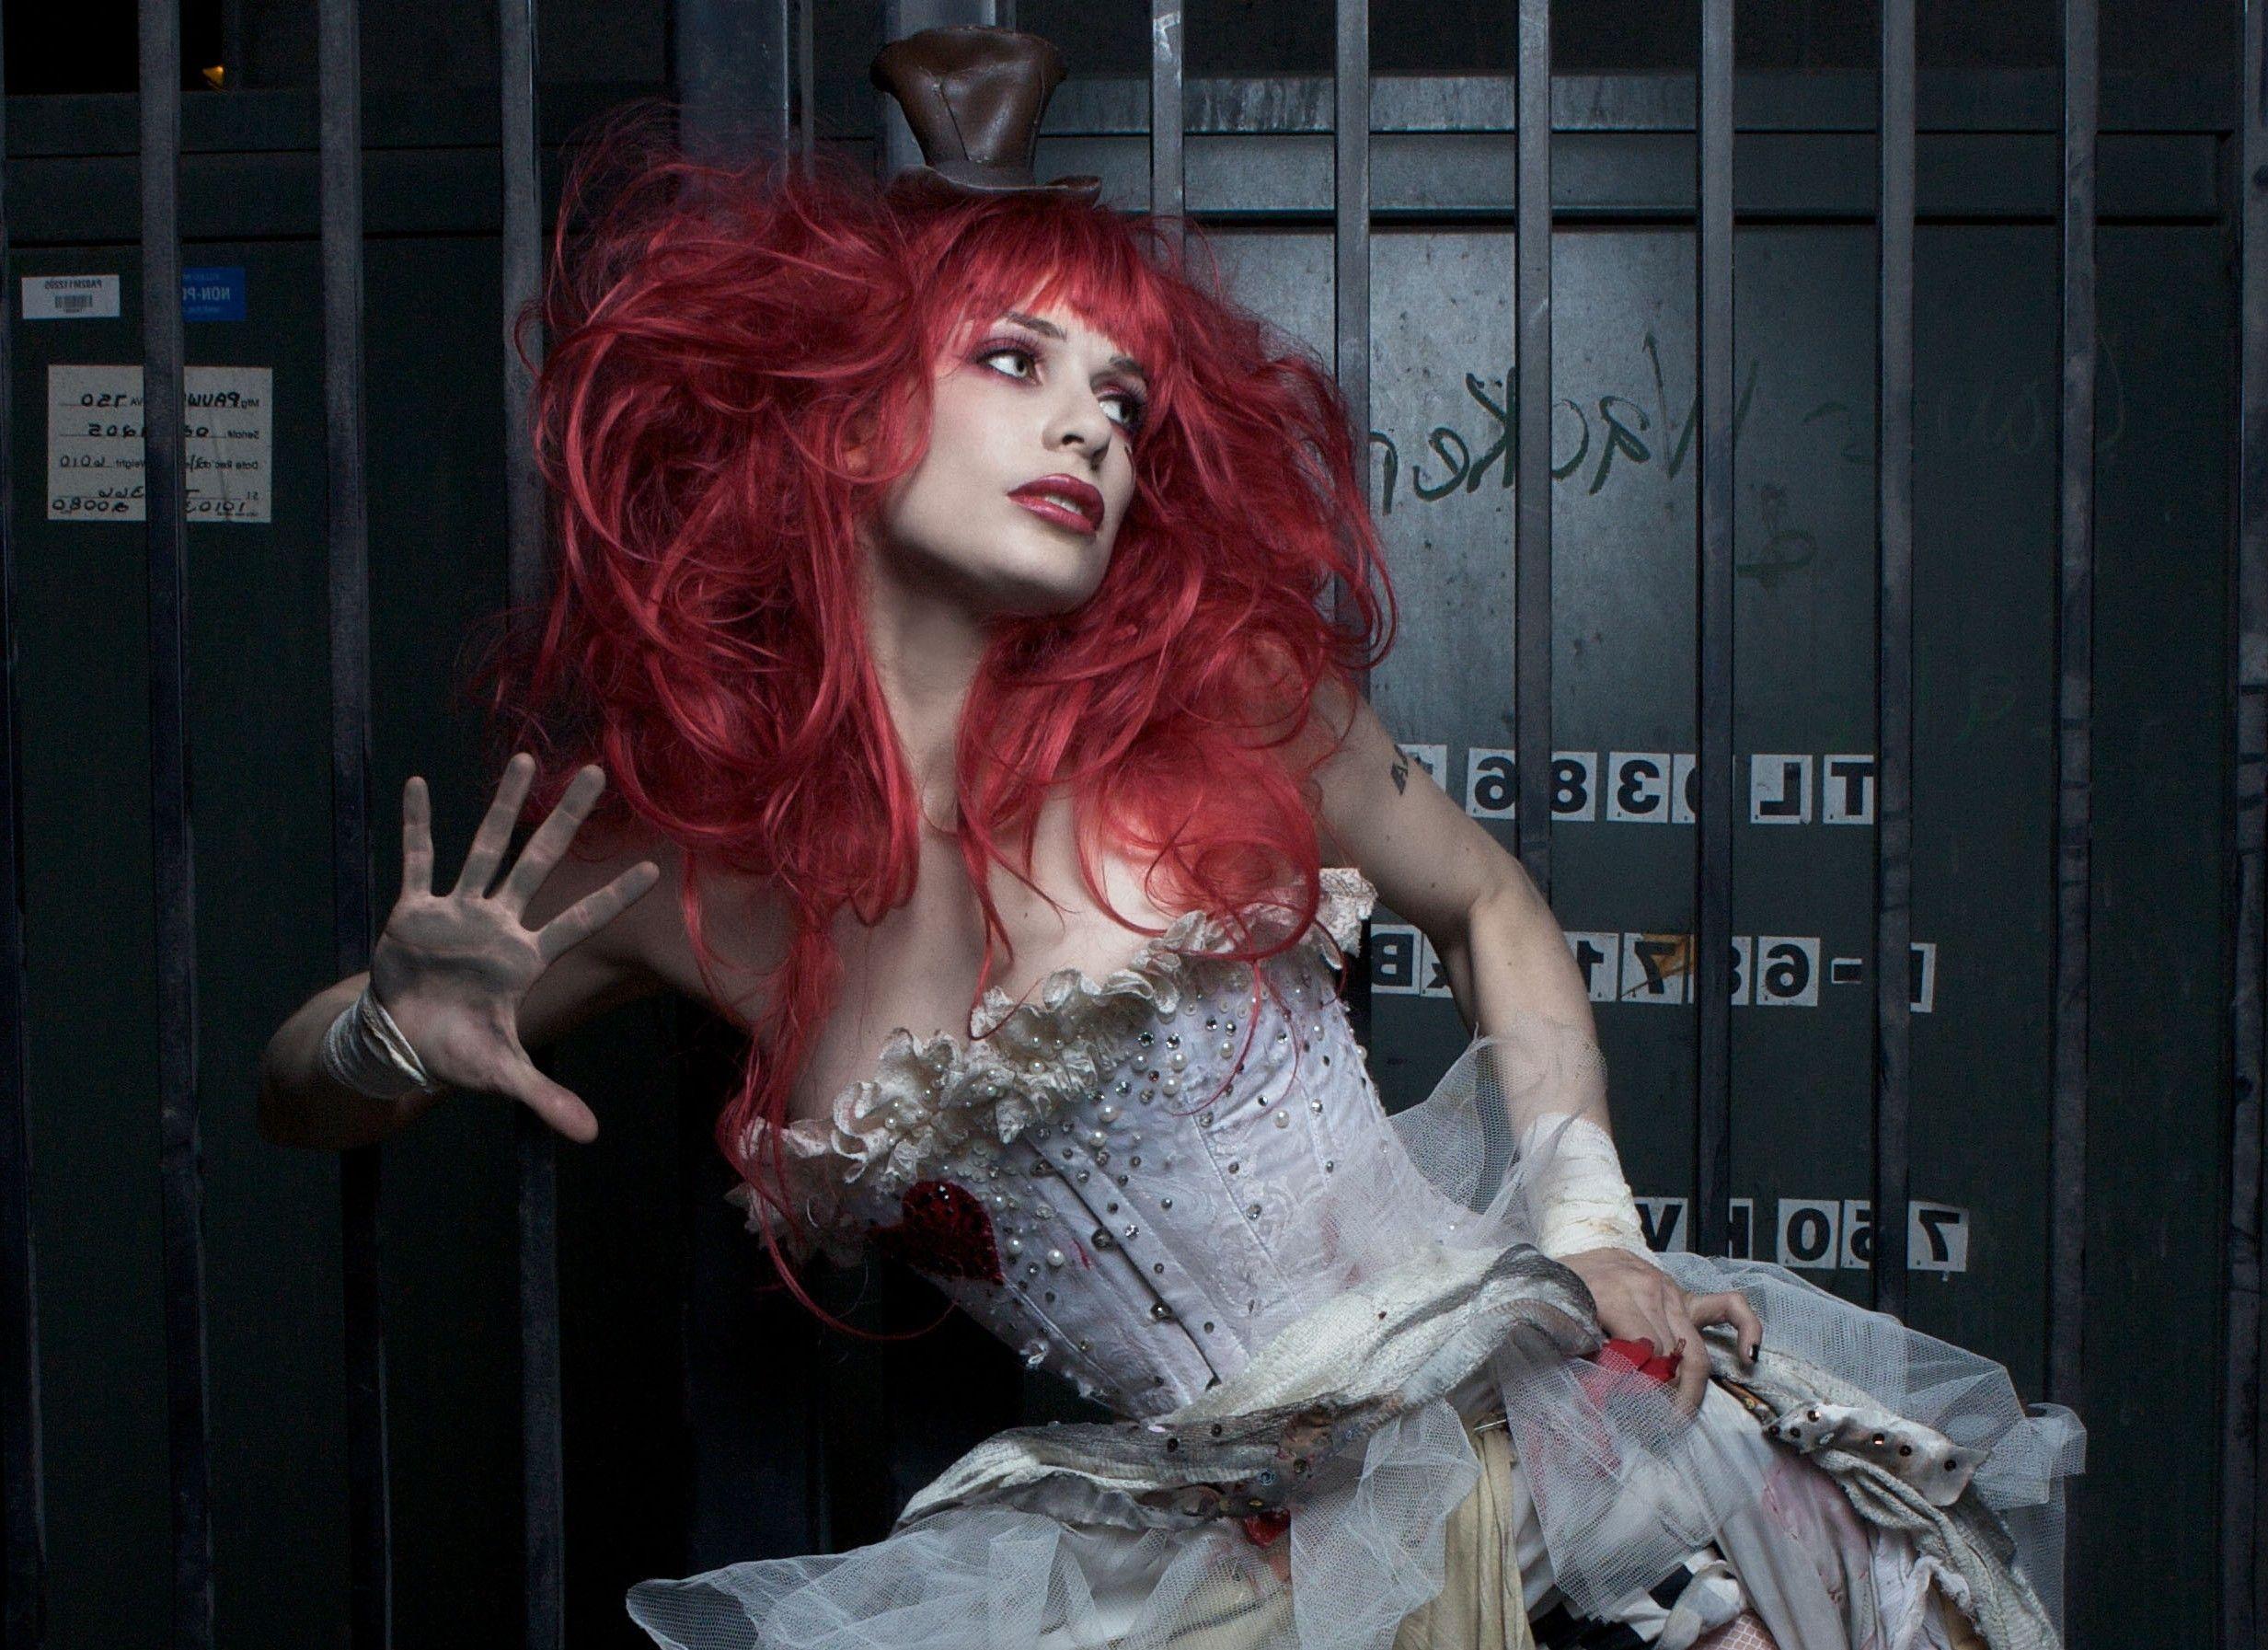 Emilie Autumn Wallpaper. High Definition. 100% Quality